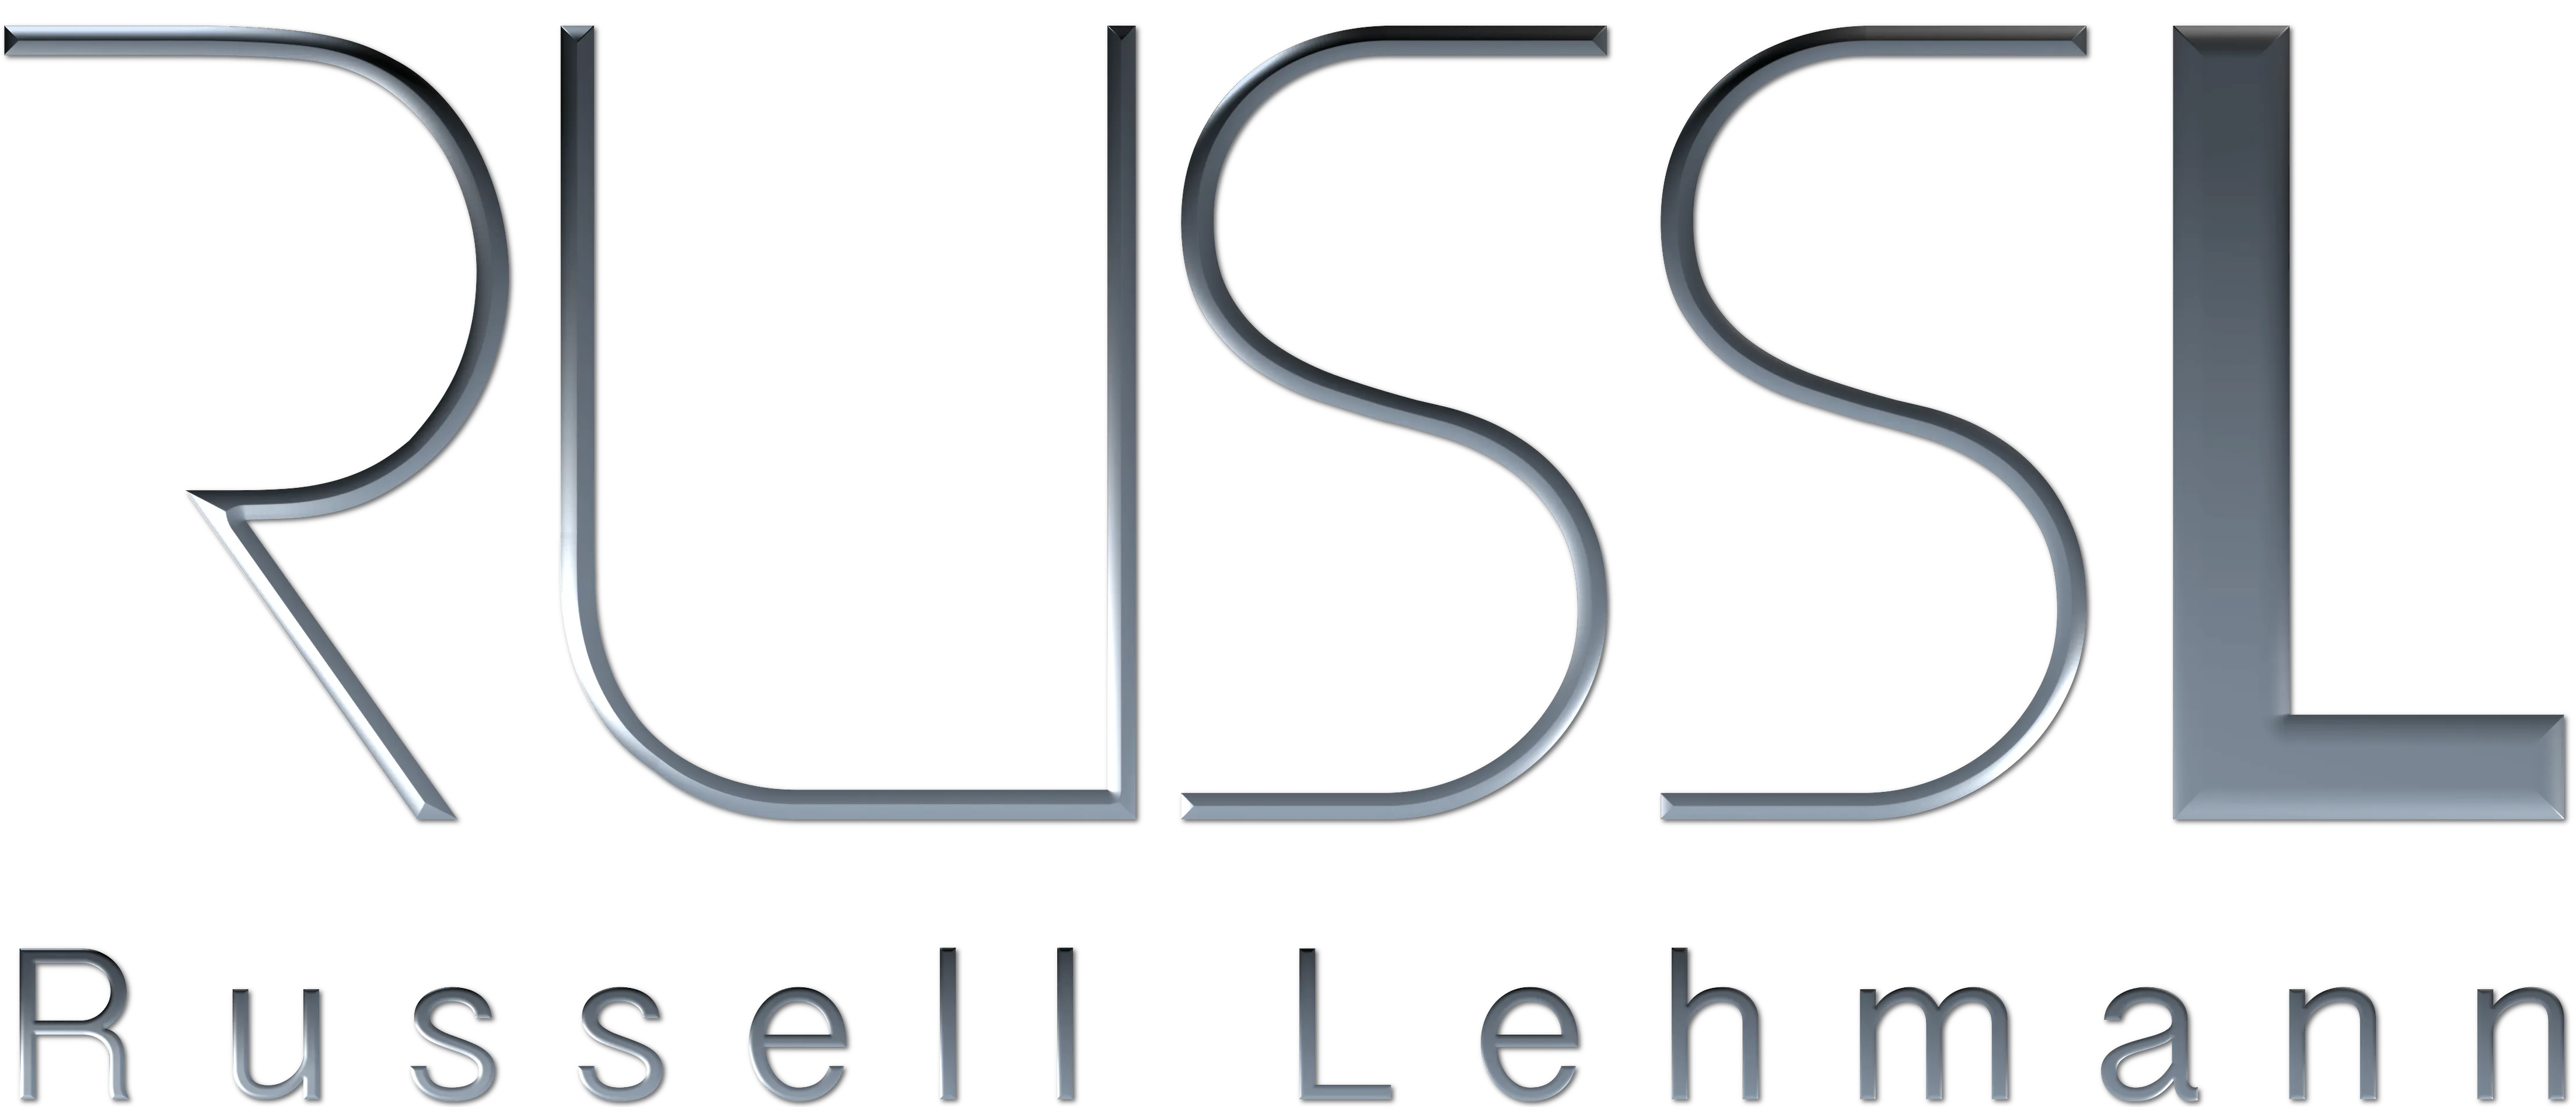 Russell Lehmann.Logo.1